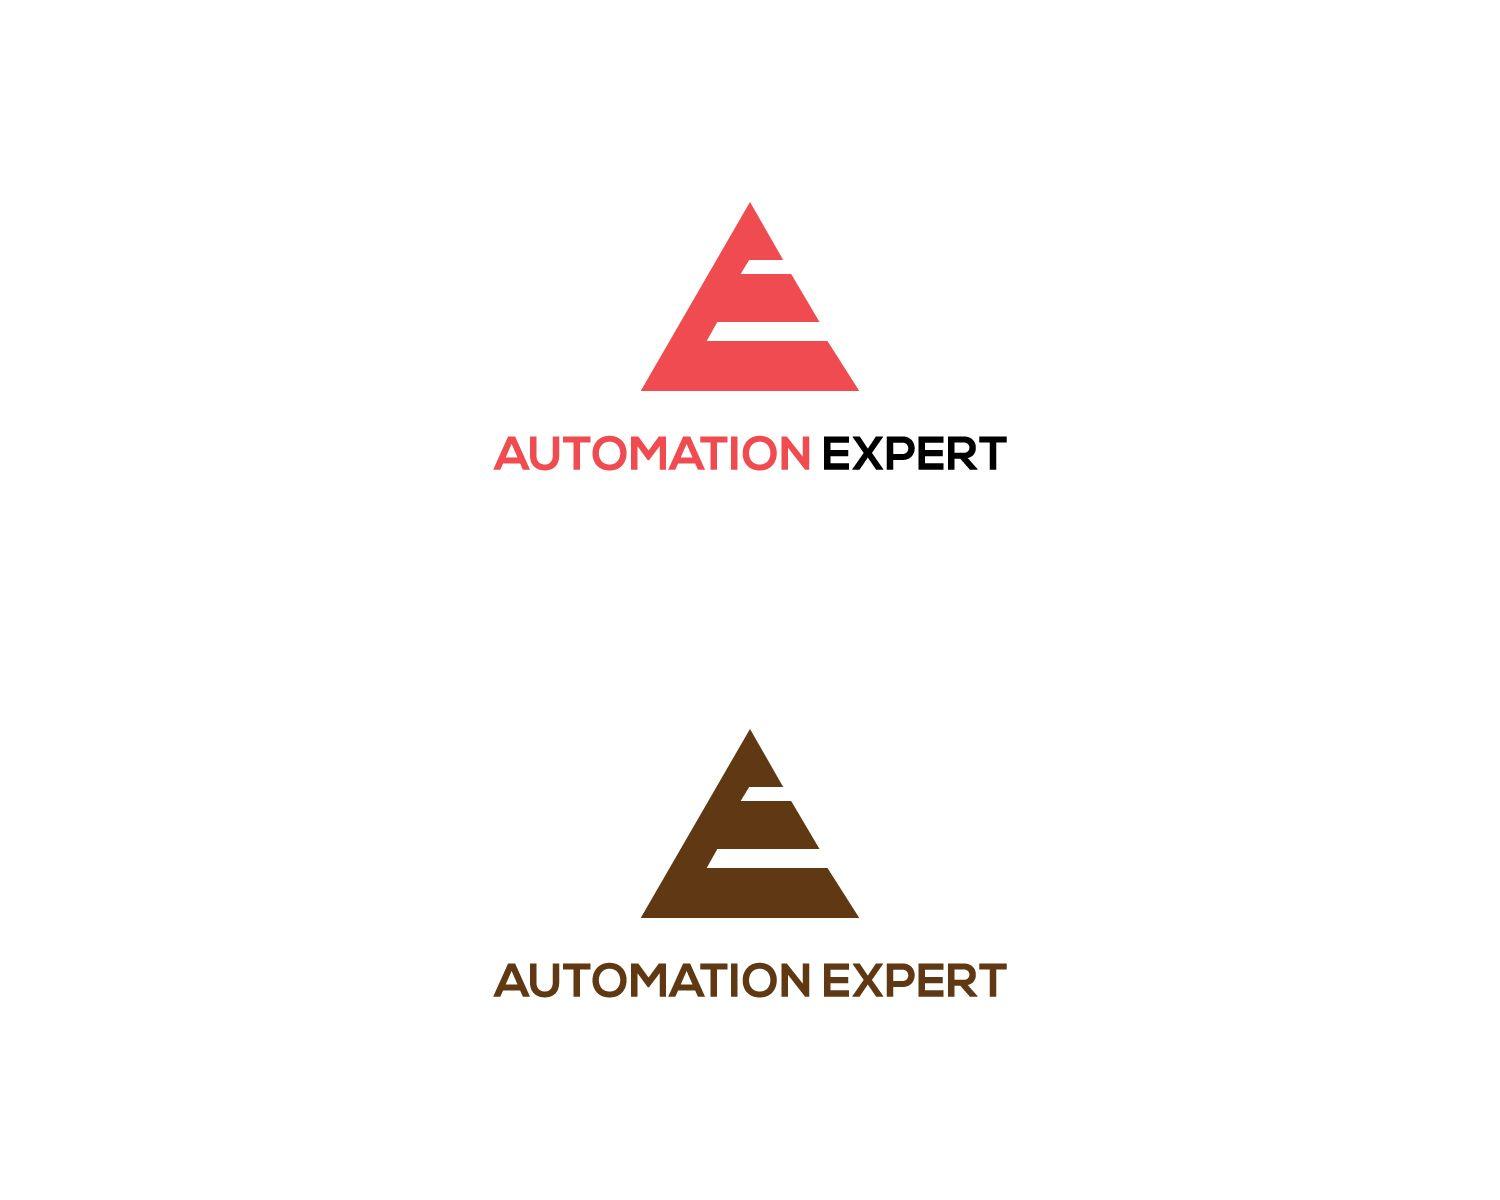 Triangle Automotive Logo - Modern, Professional, Automotive Logo Design for Automation expert ...